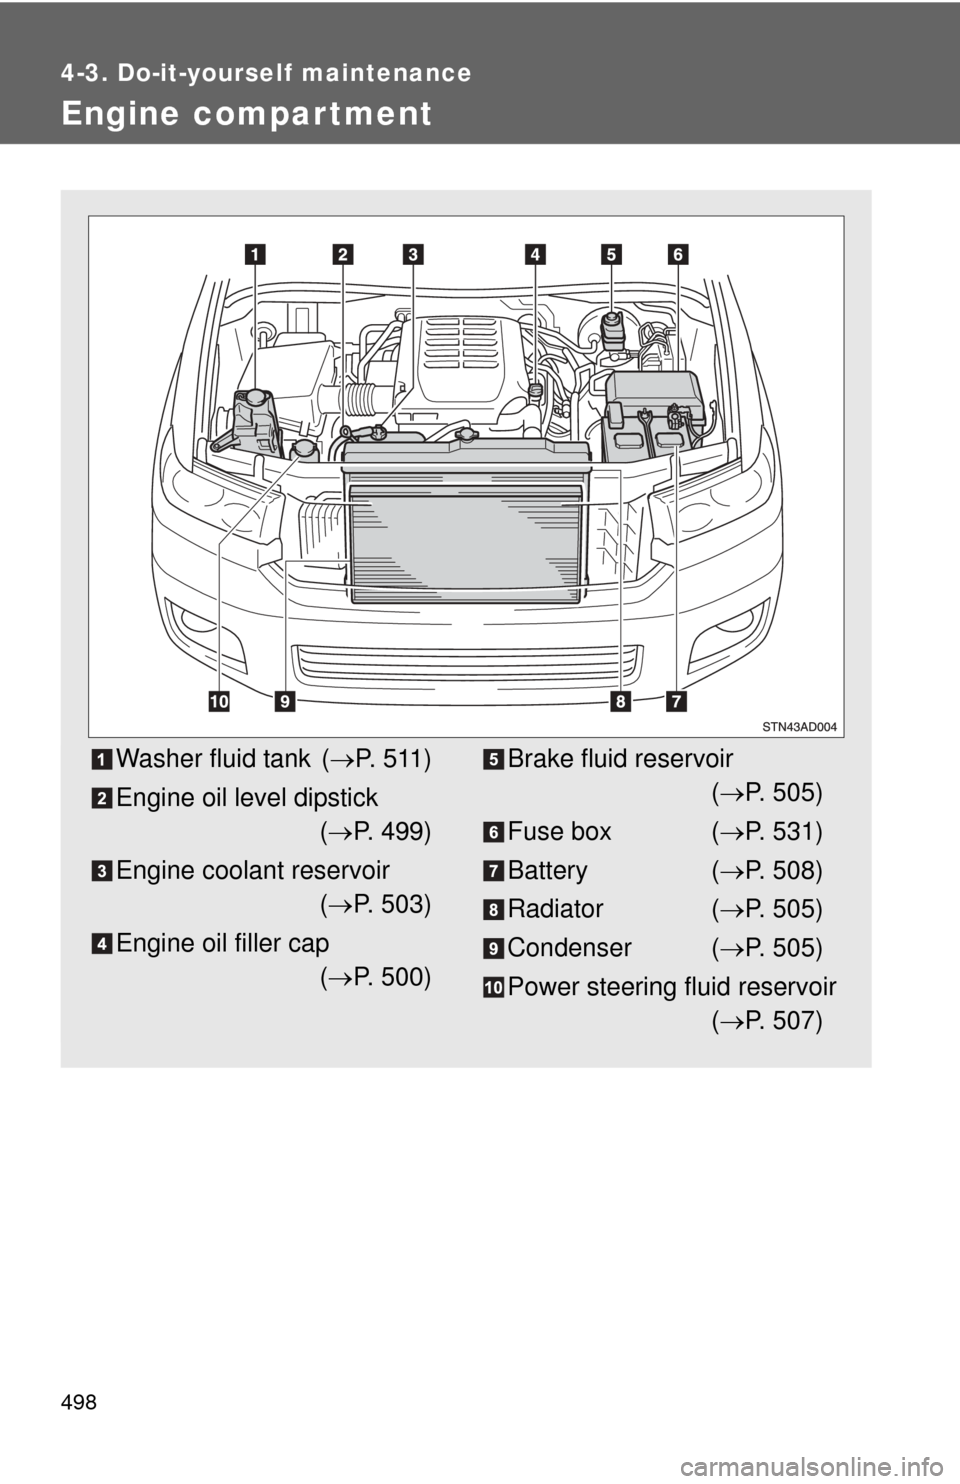 TOYOTA SEQUOIA 2010 2.G Owners Manual 498
4-3. Do-it-yourself maintenance
Engine compar tment
Washer fluid tank (P.  5 11 )
Engine oil level dipstick ( P. 499)
Engine coolant reservoir ( P. 503)
Engine oil filler cap ( P. 500)